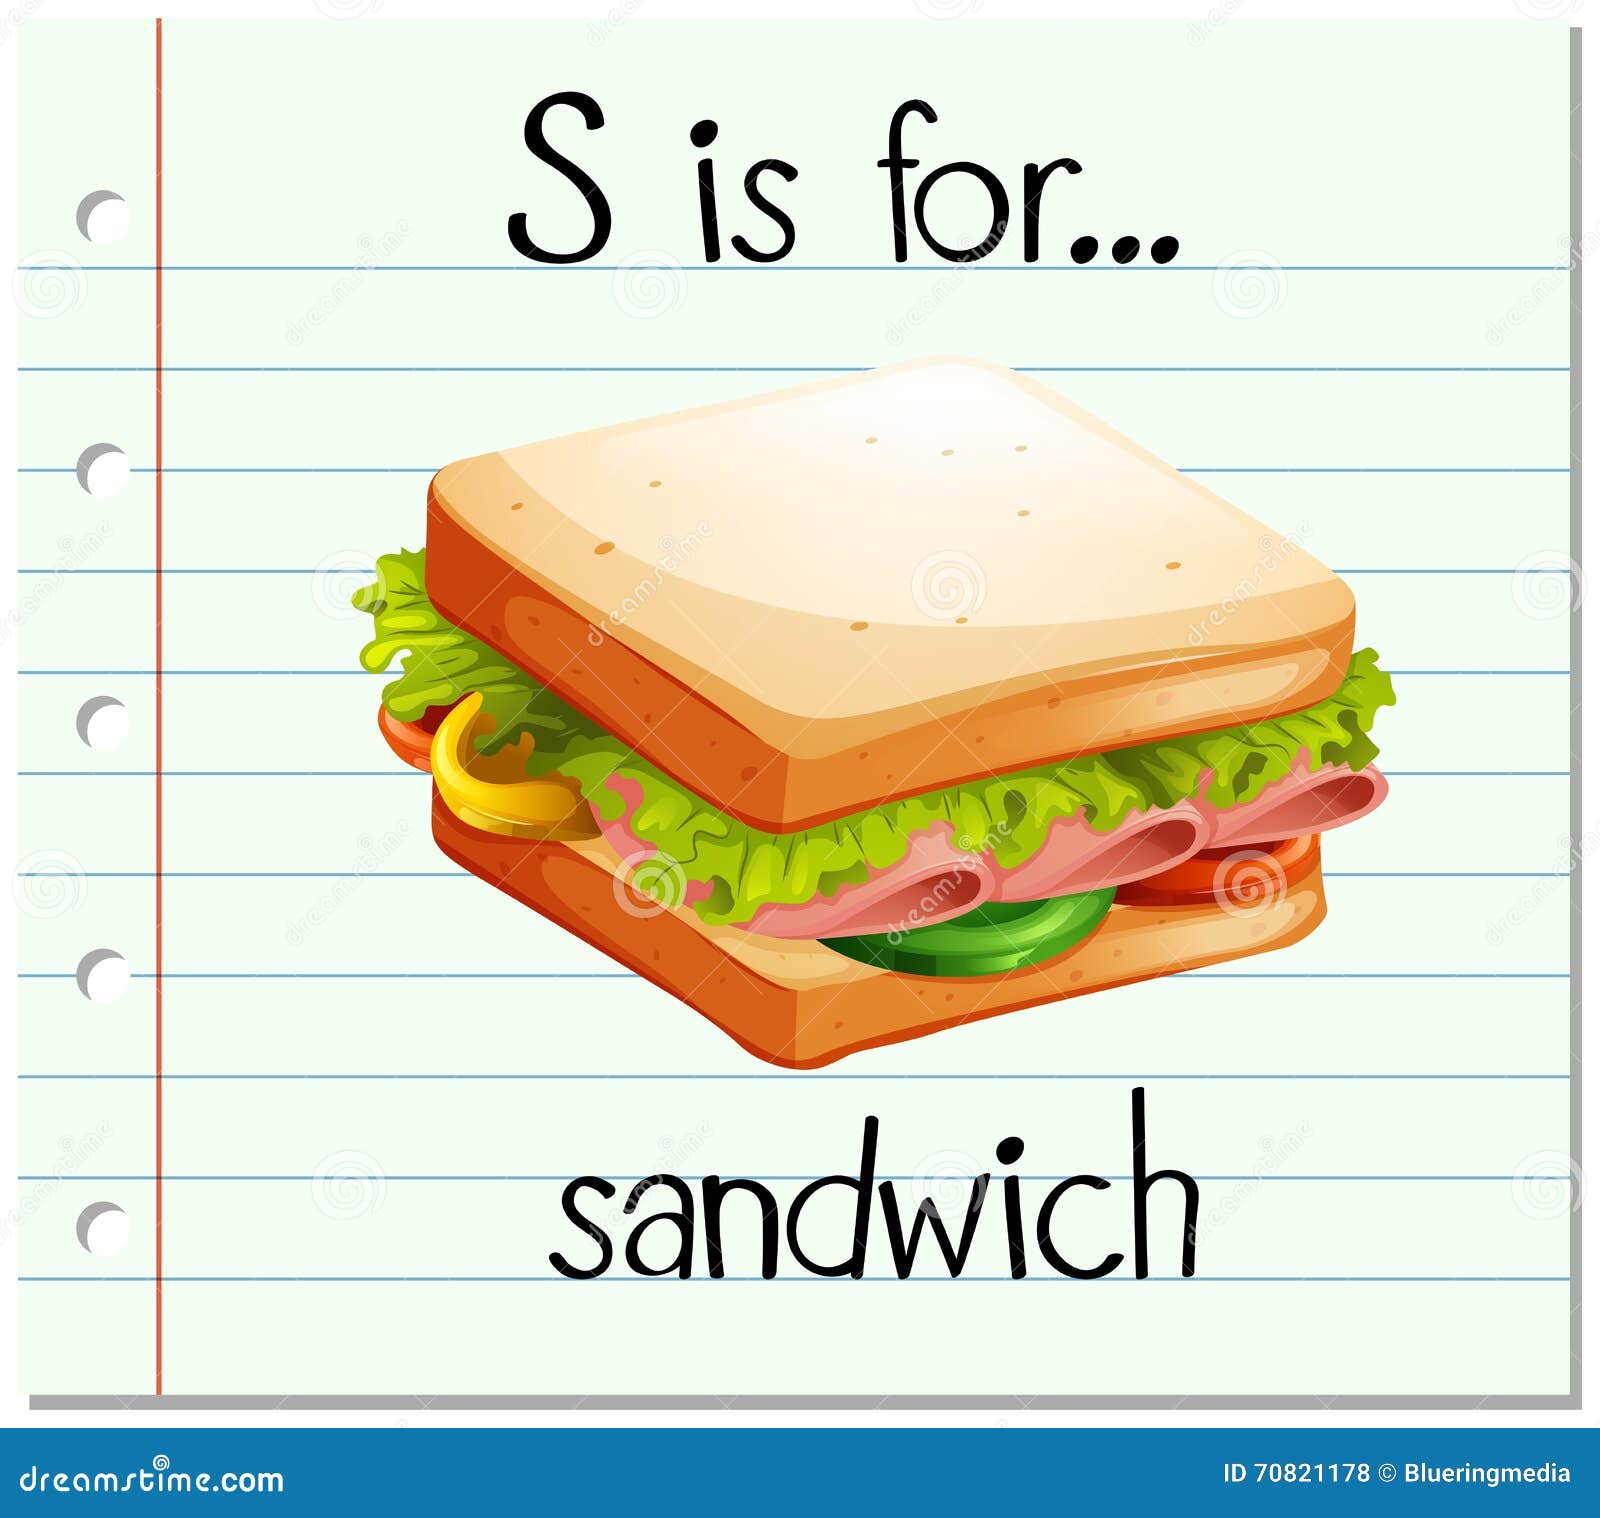 Как будет по английски бутерброд. Сэндвич по английскому. Карточки по английскому сэндвич. Карточки по английскому бутерброд. Карточка сэндвич на английском.